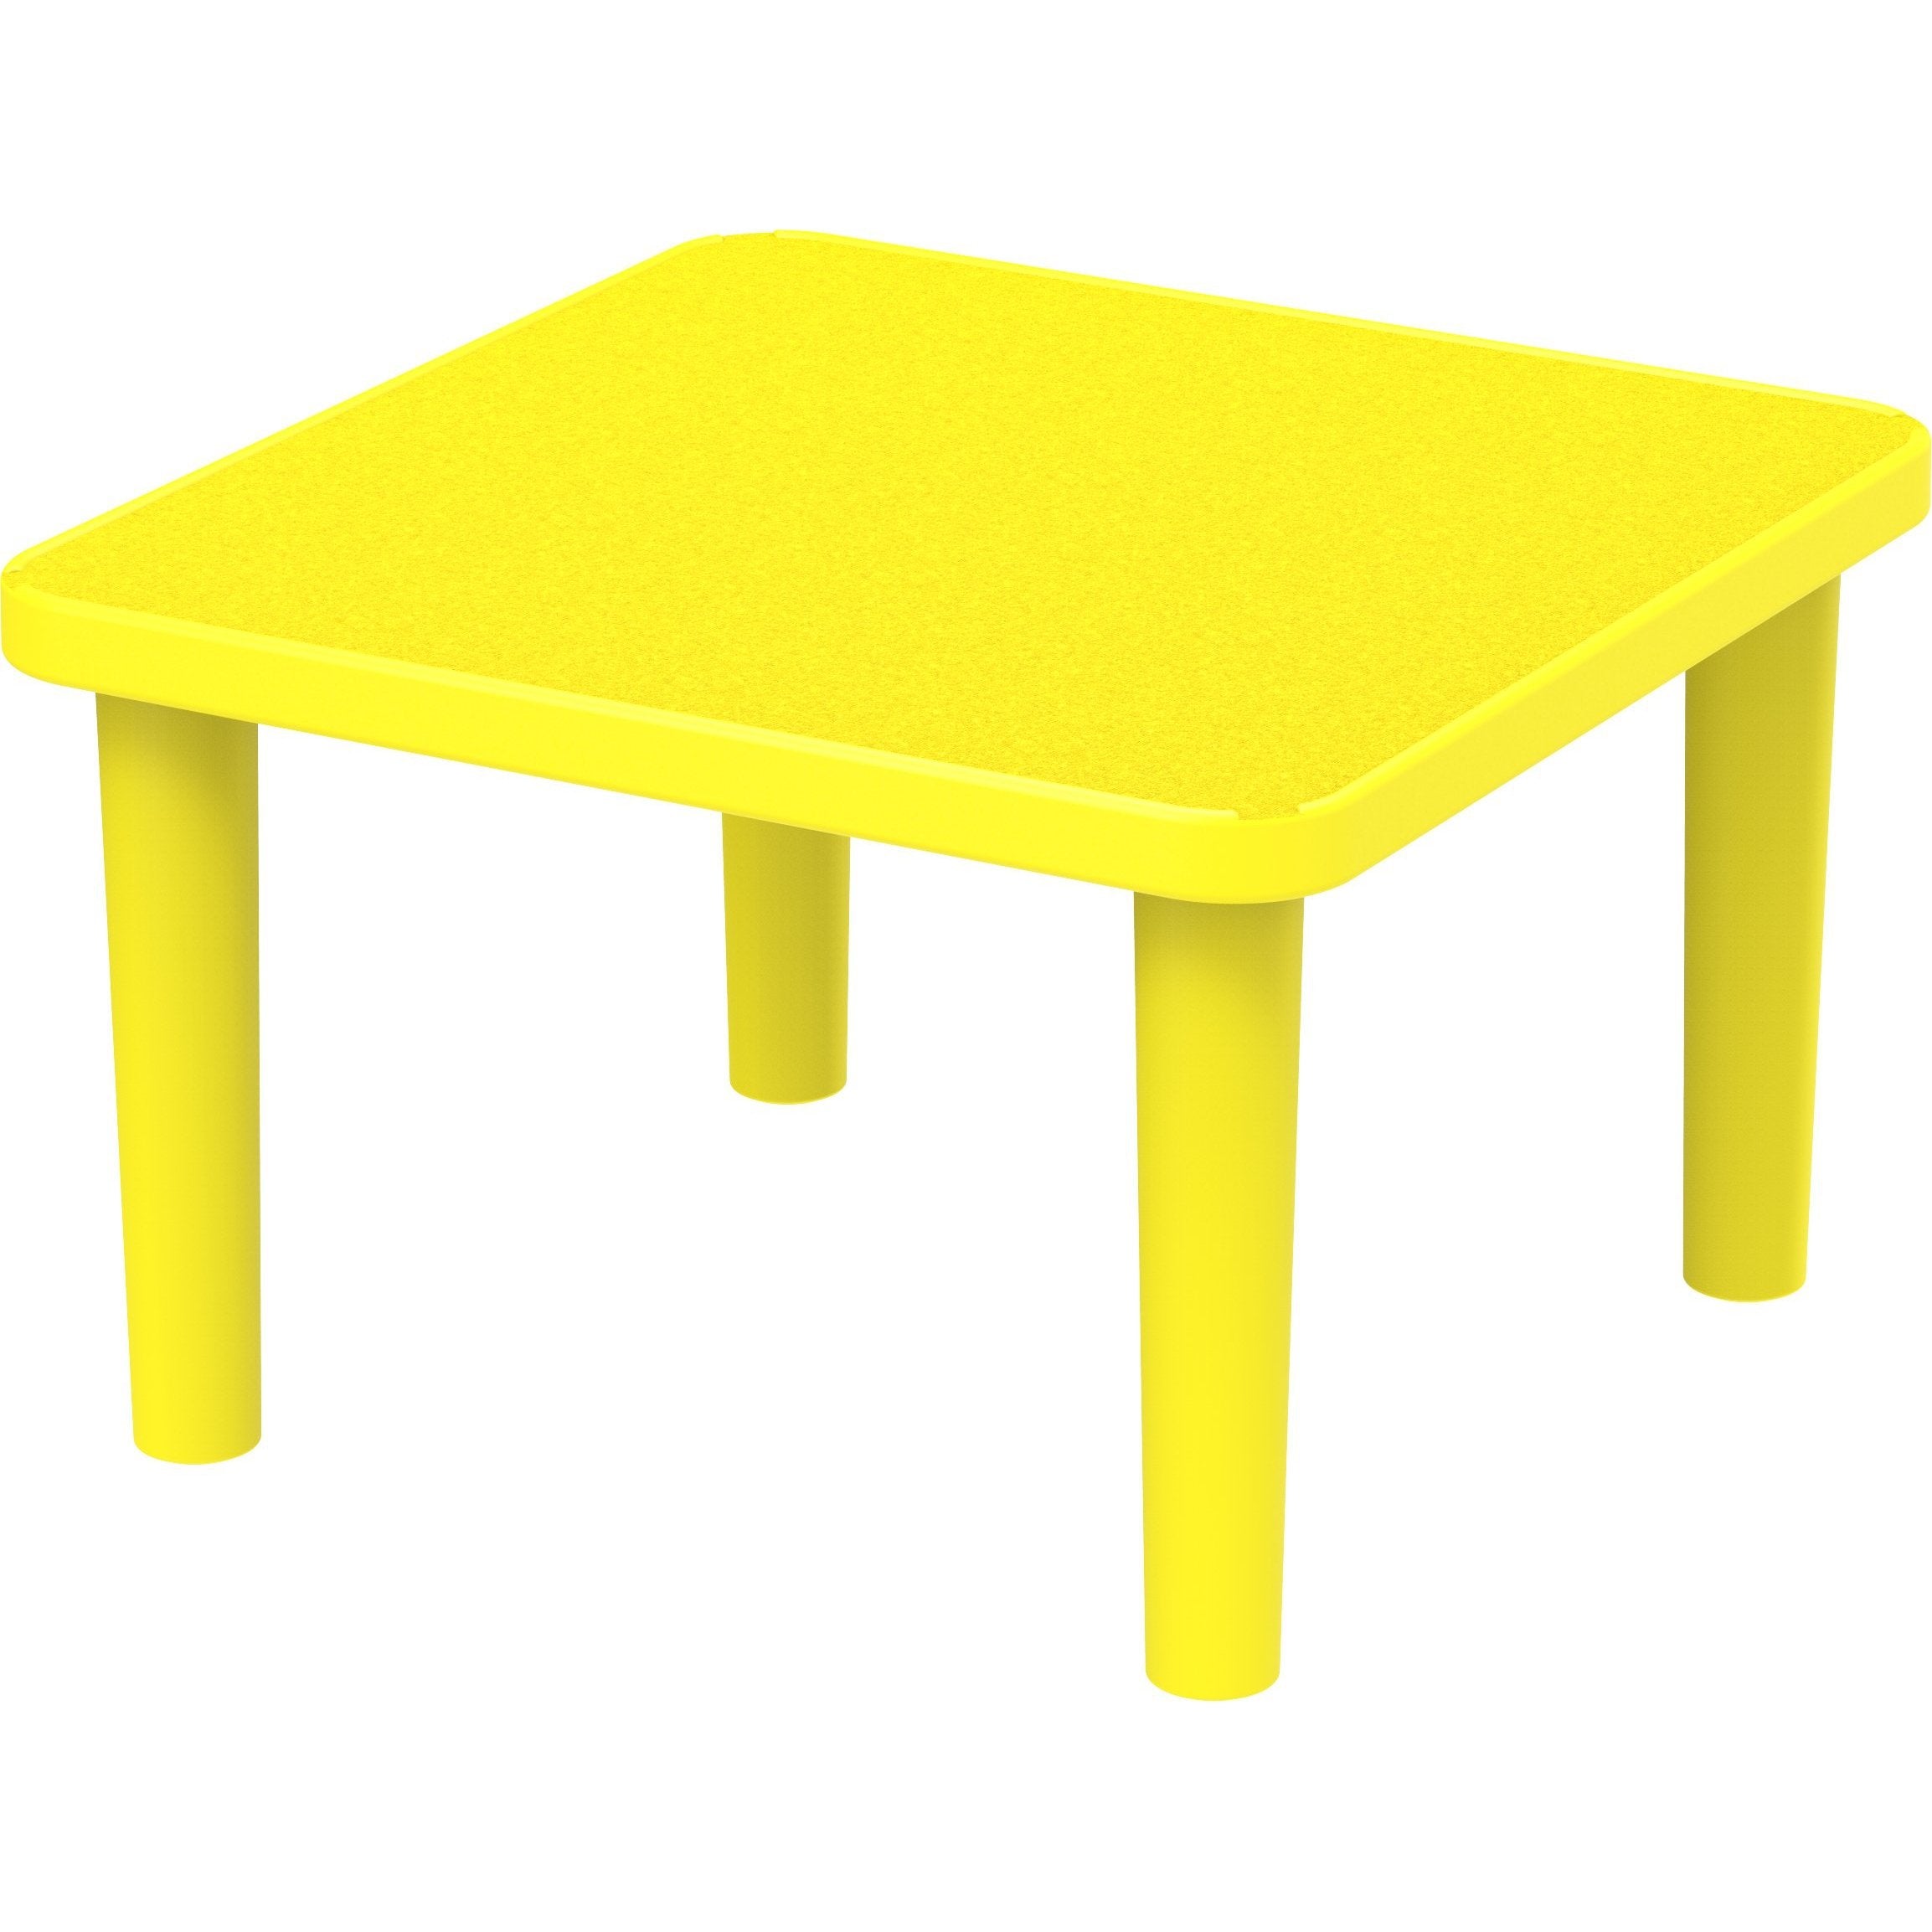 Duramax Kindergarten Table Duramax Kindergarten Table - Square Yellow